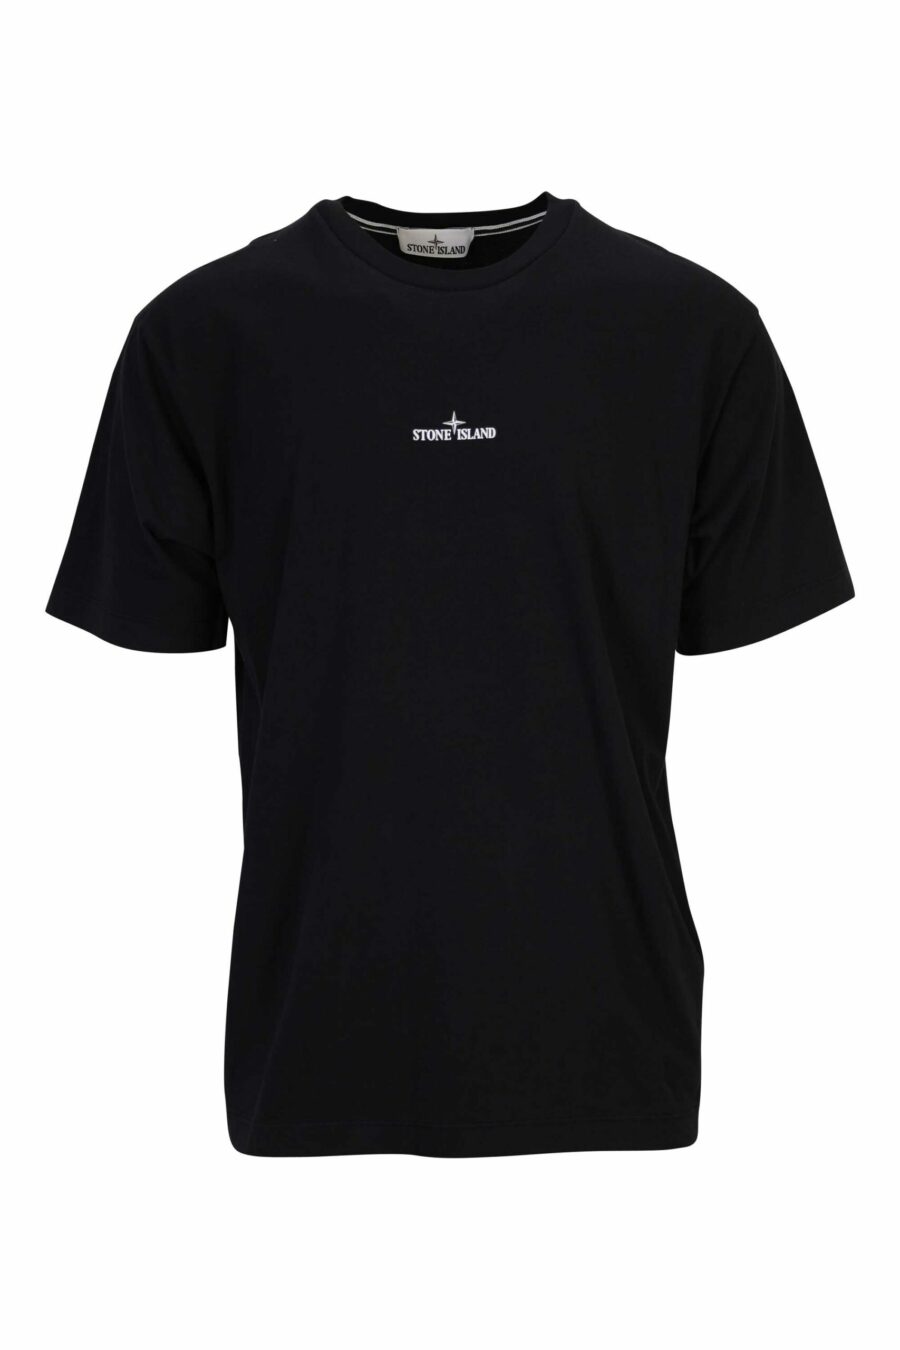 Camiseta negra con minilogo centrado negro - 8052572912894 scaled